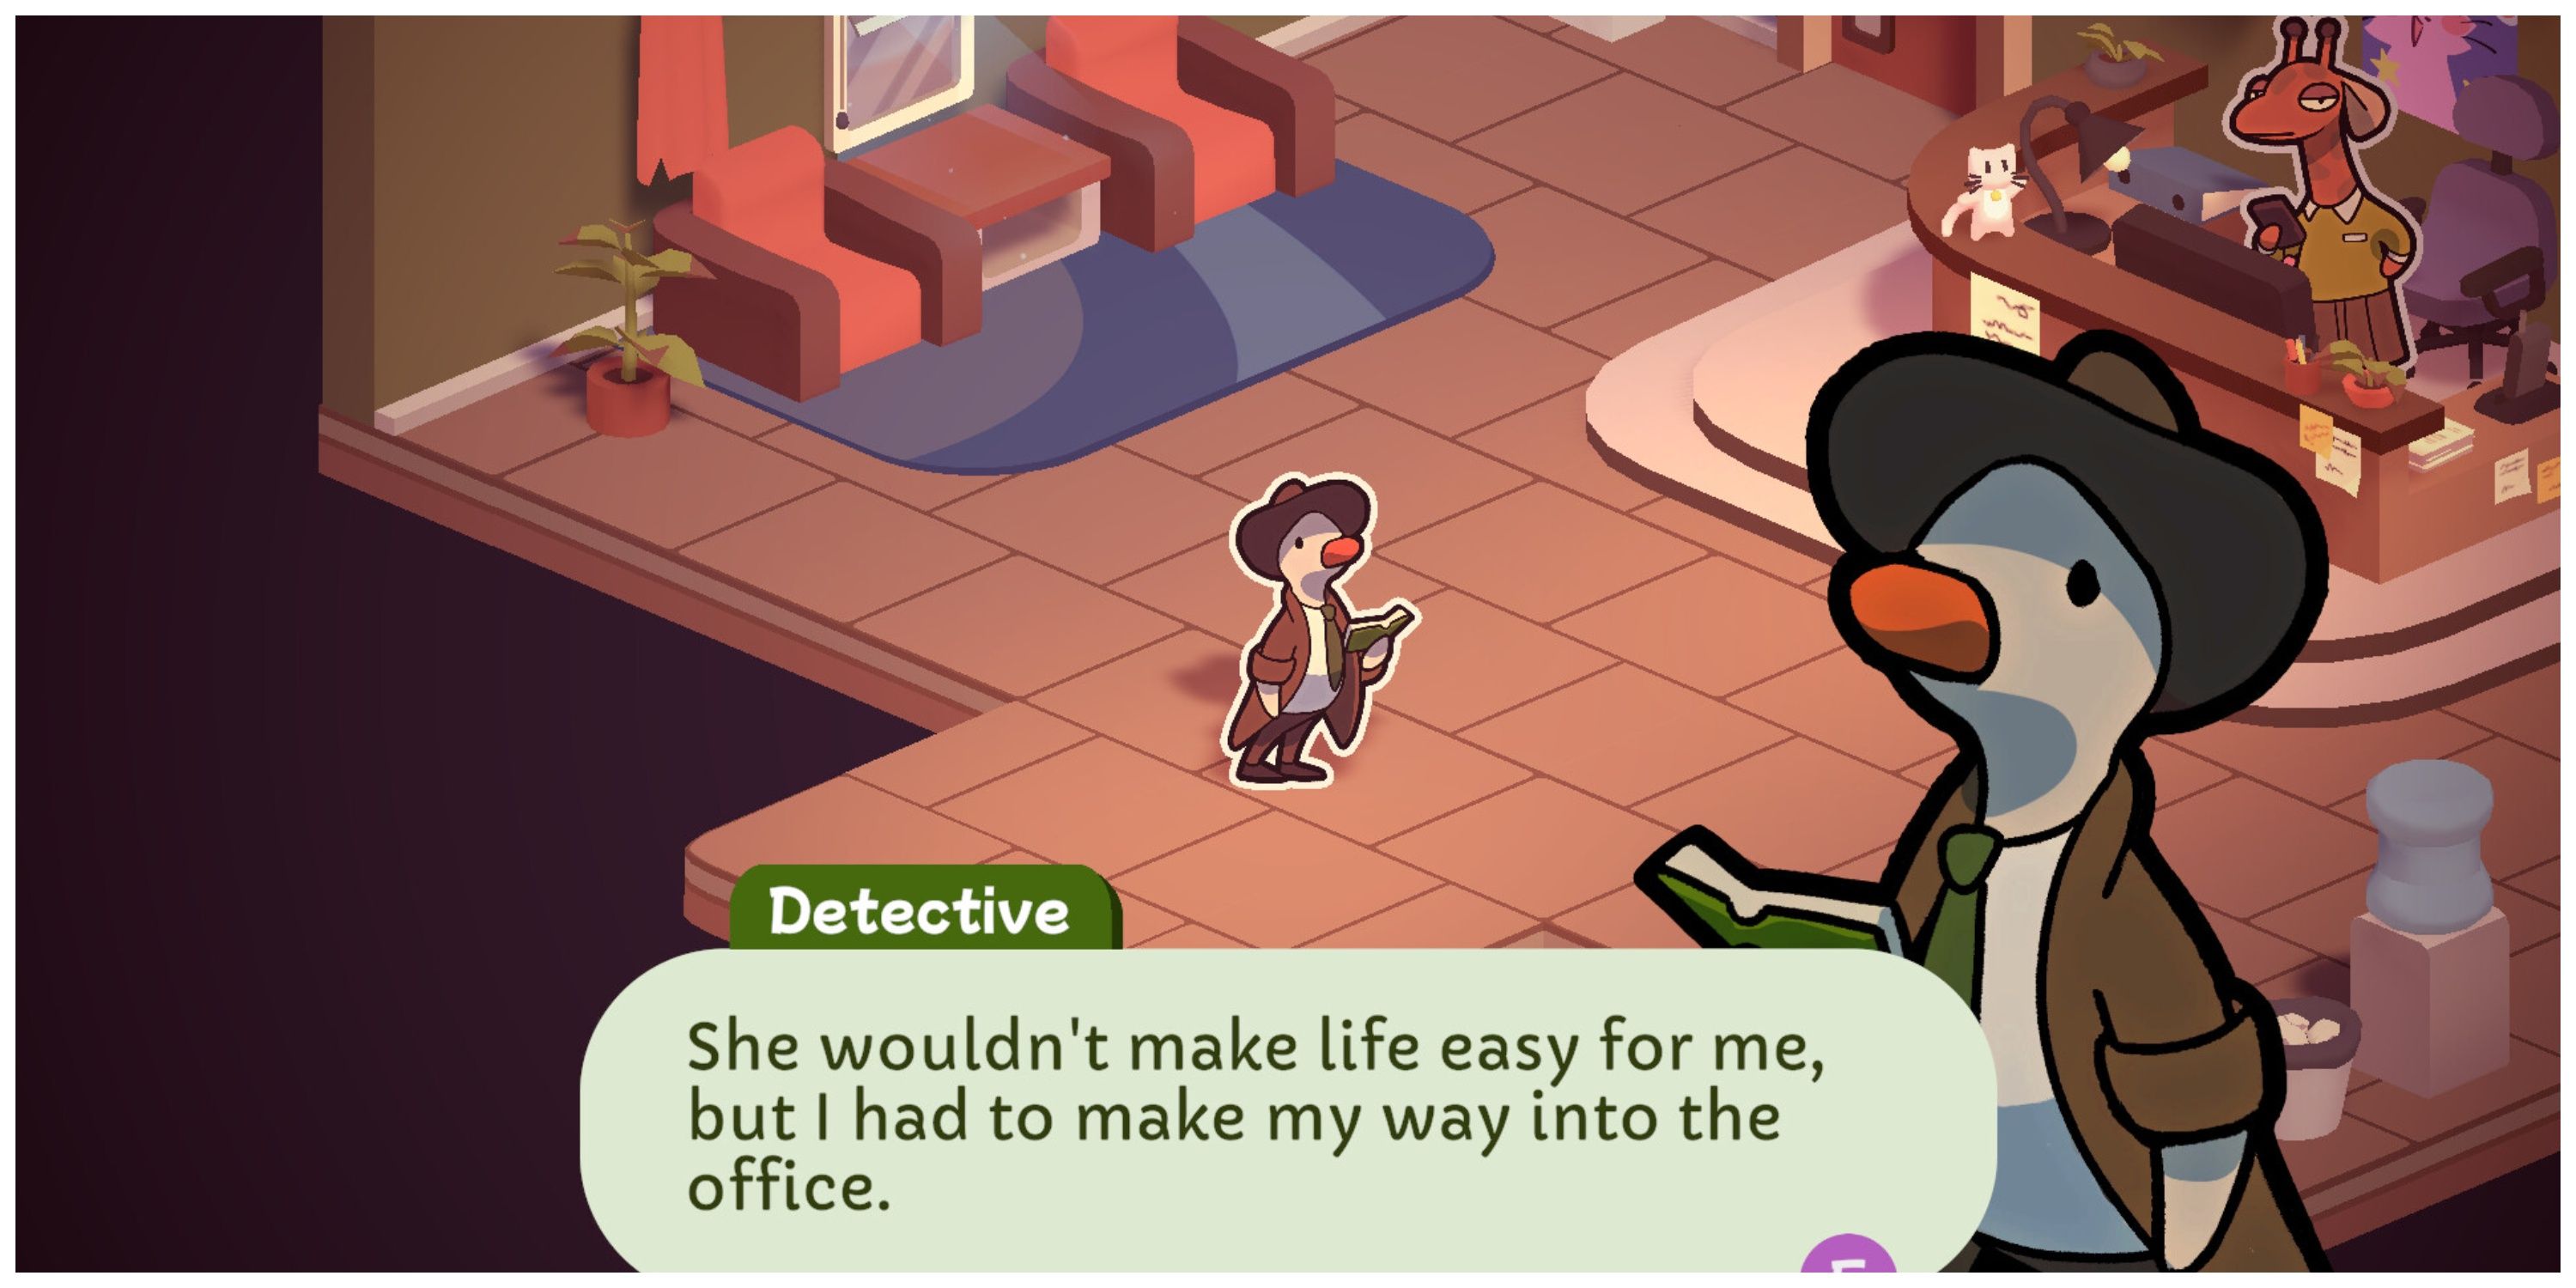 Duck Detective: The Secret Salami - Steam Store Page Screenshot (Detective's Inner Monologue)